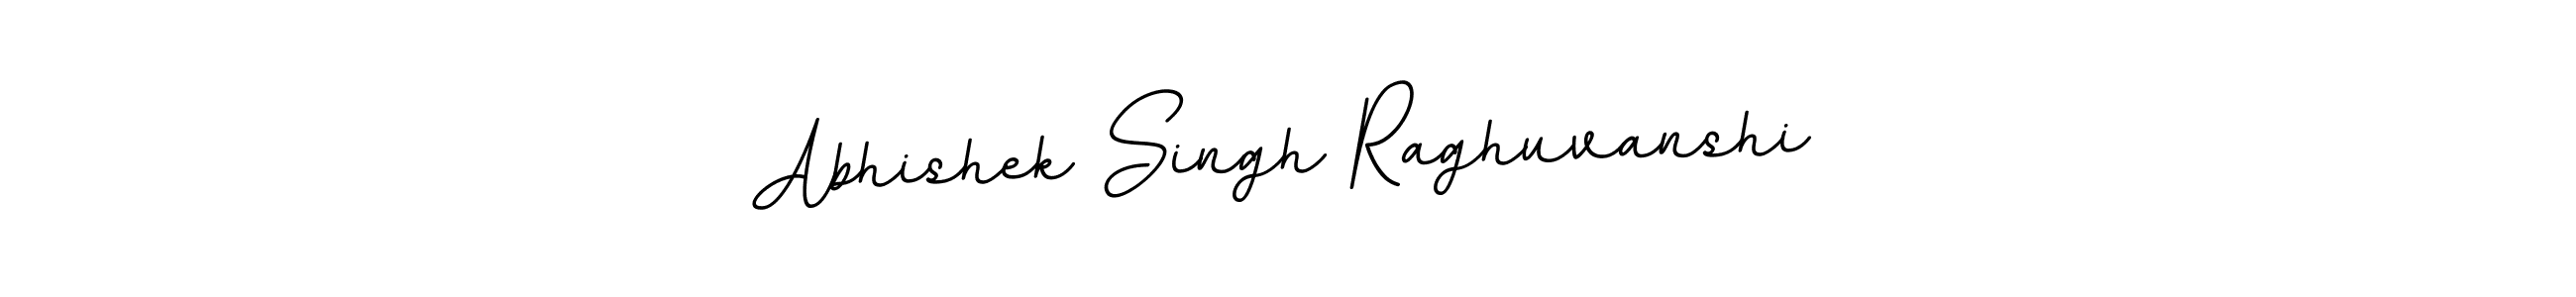 Best and Professional Signature Style for Abhishek Singh Raghuvanshi. BallpointsItalic-DORy9 Best Signature Style Collection. Abhishek Singh Raghuvanshi signature style 11 images and pictures png